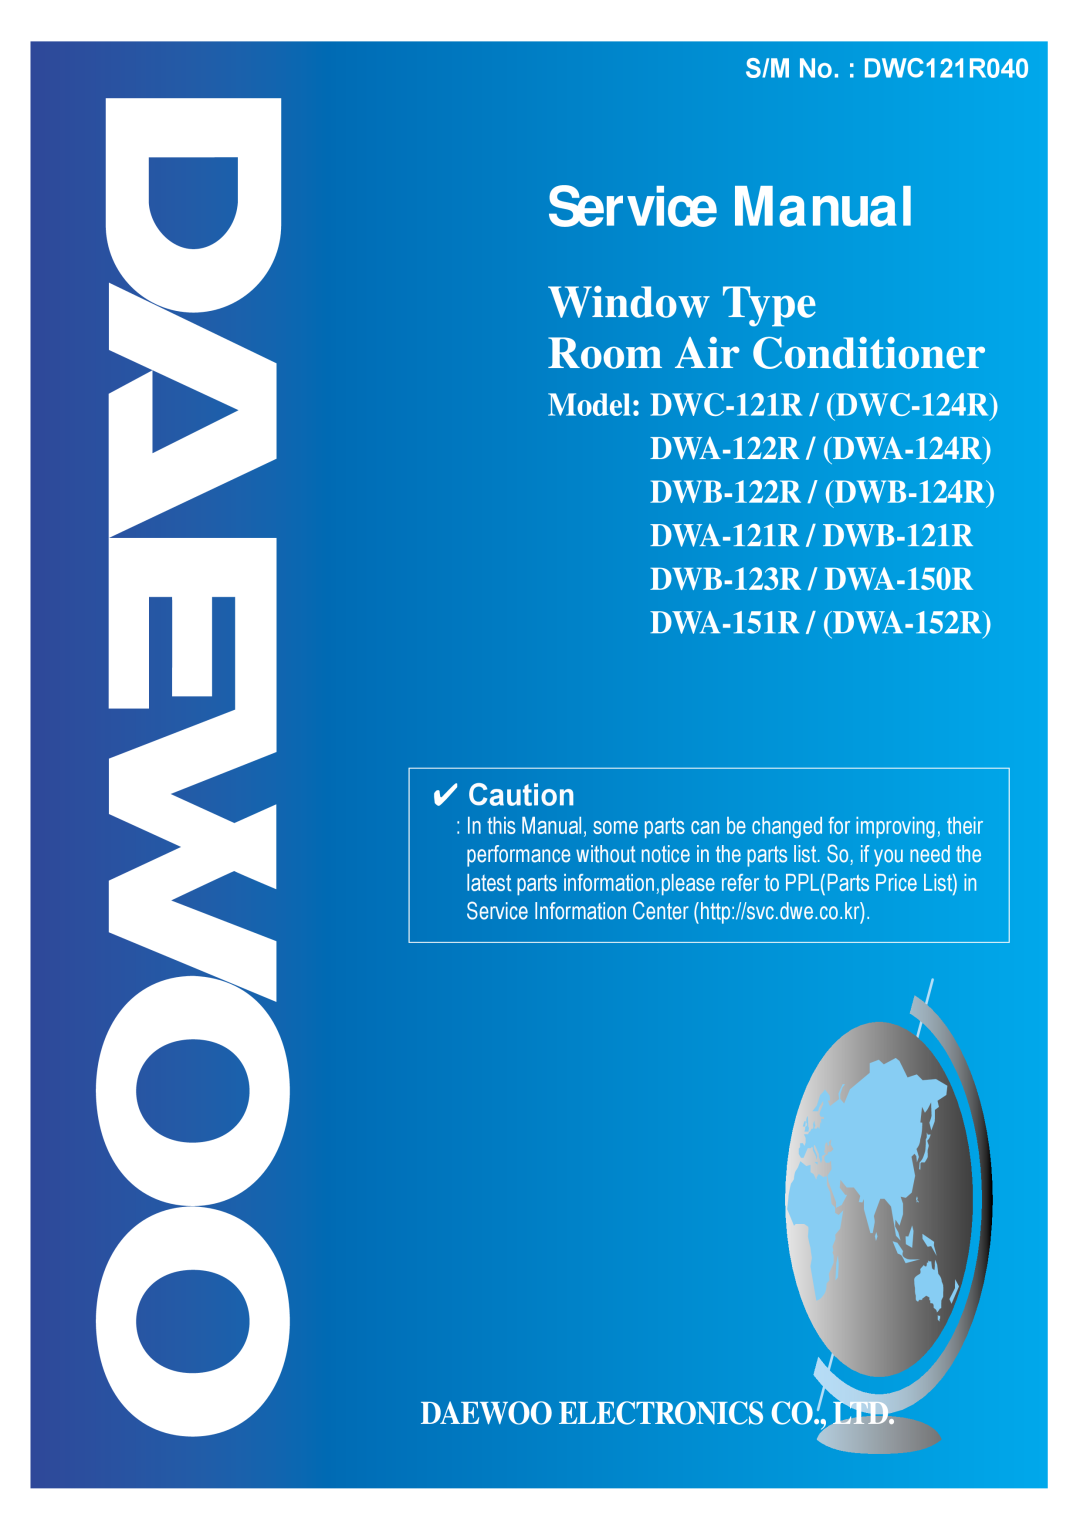 Daewoo service manual Window Type Room Air Conditioner, Model DWC-121R / DWC-124R DWA-122R / DWA-124R 